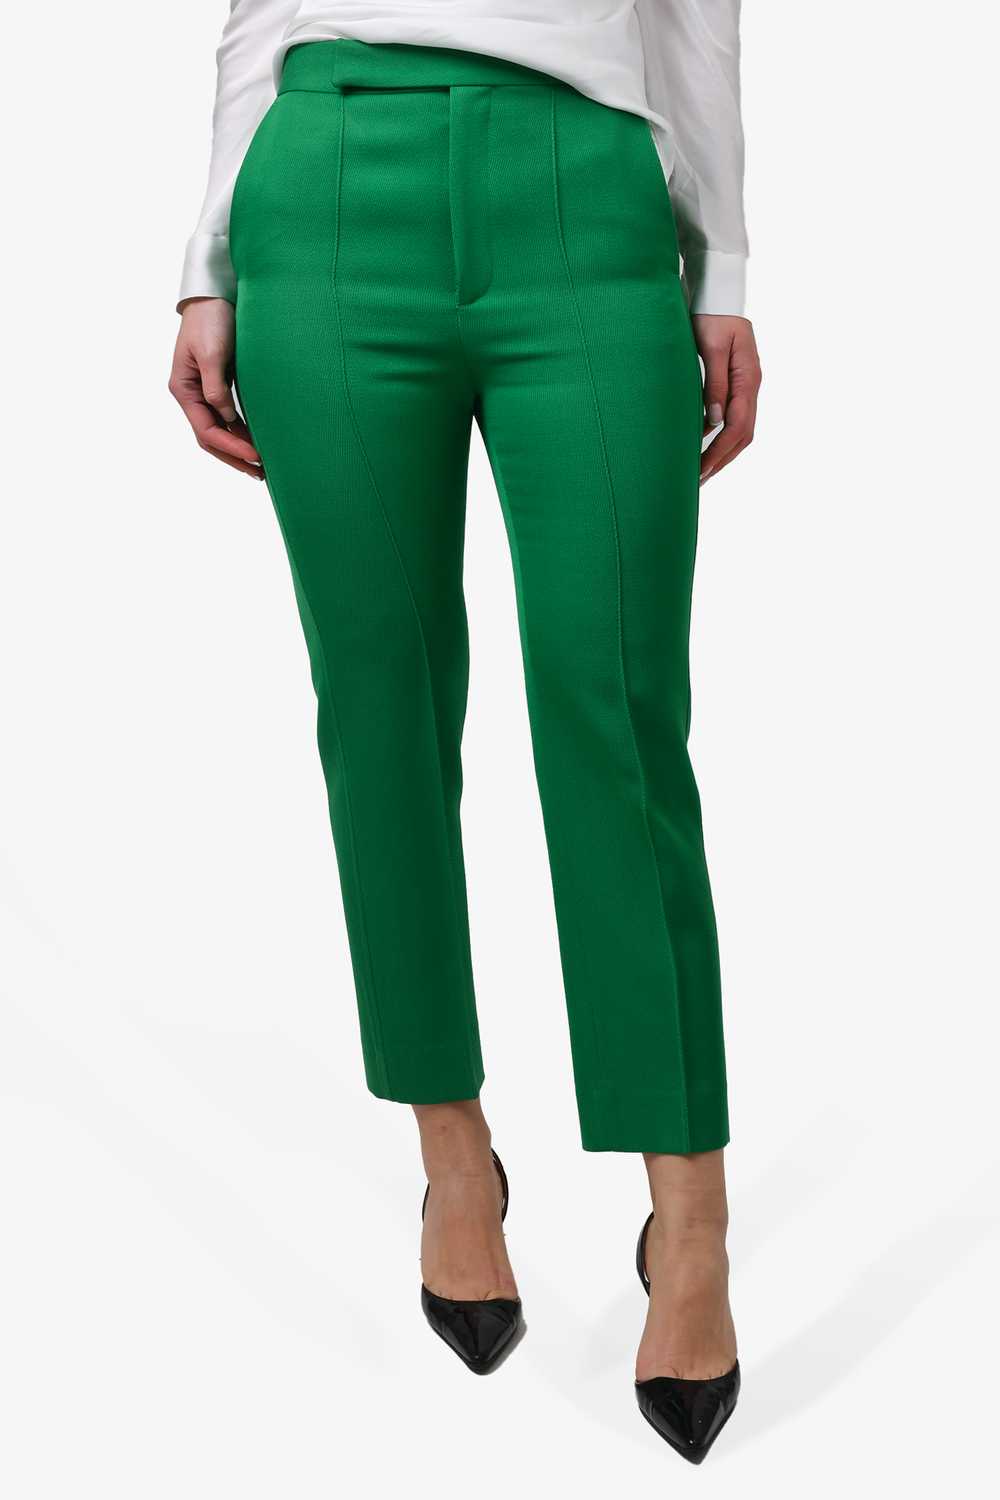 Celine Green Wool Straight Leg Trousers Size 34 - image 1